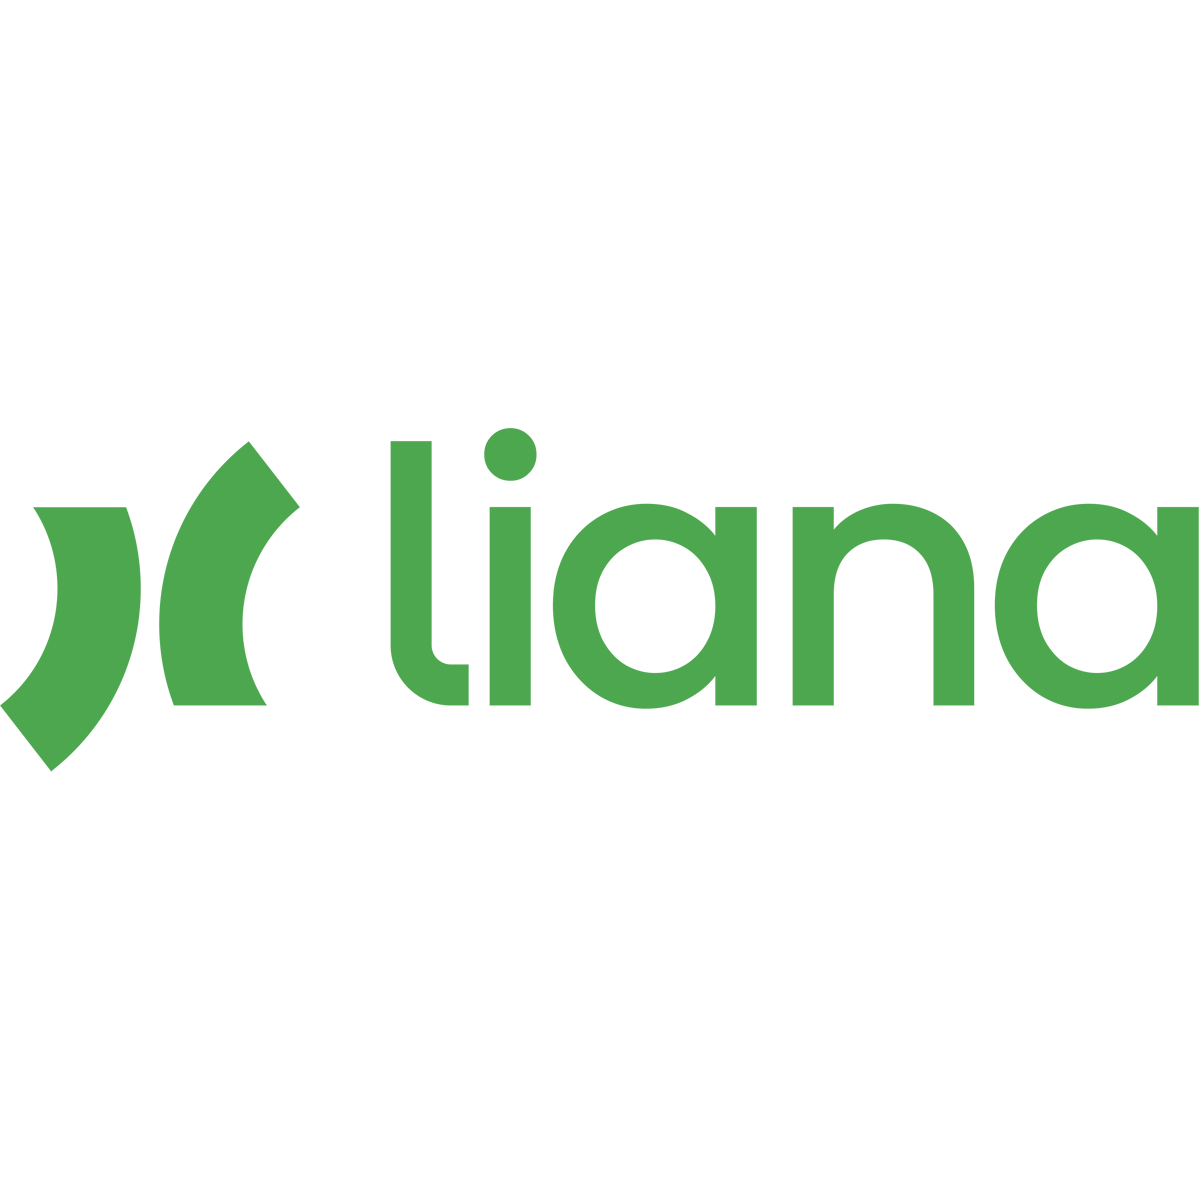 Liana Technologies